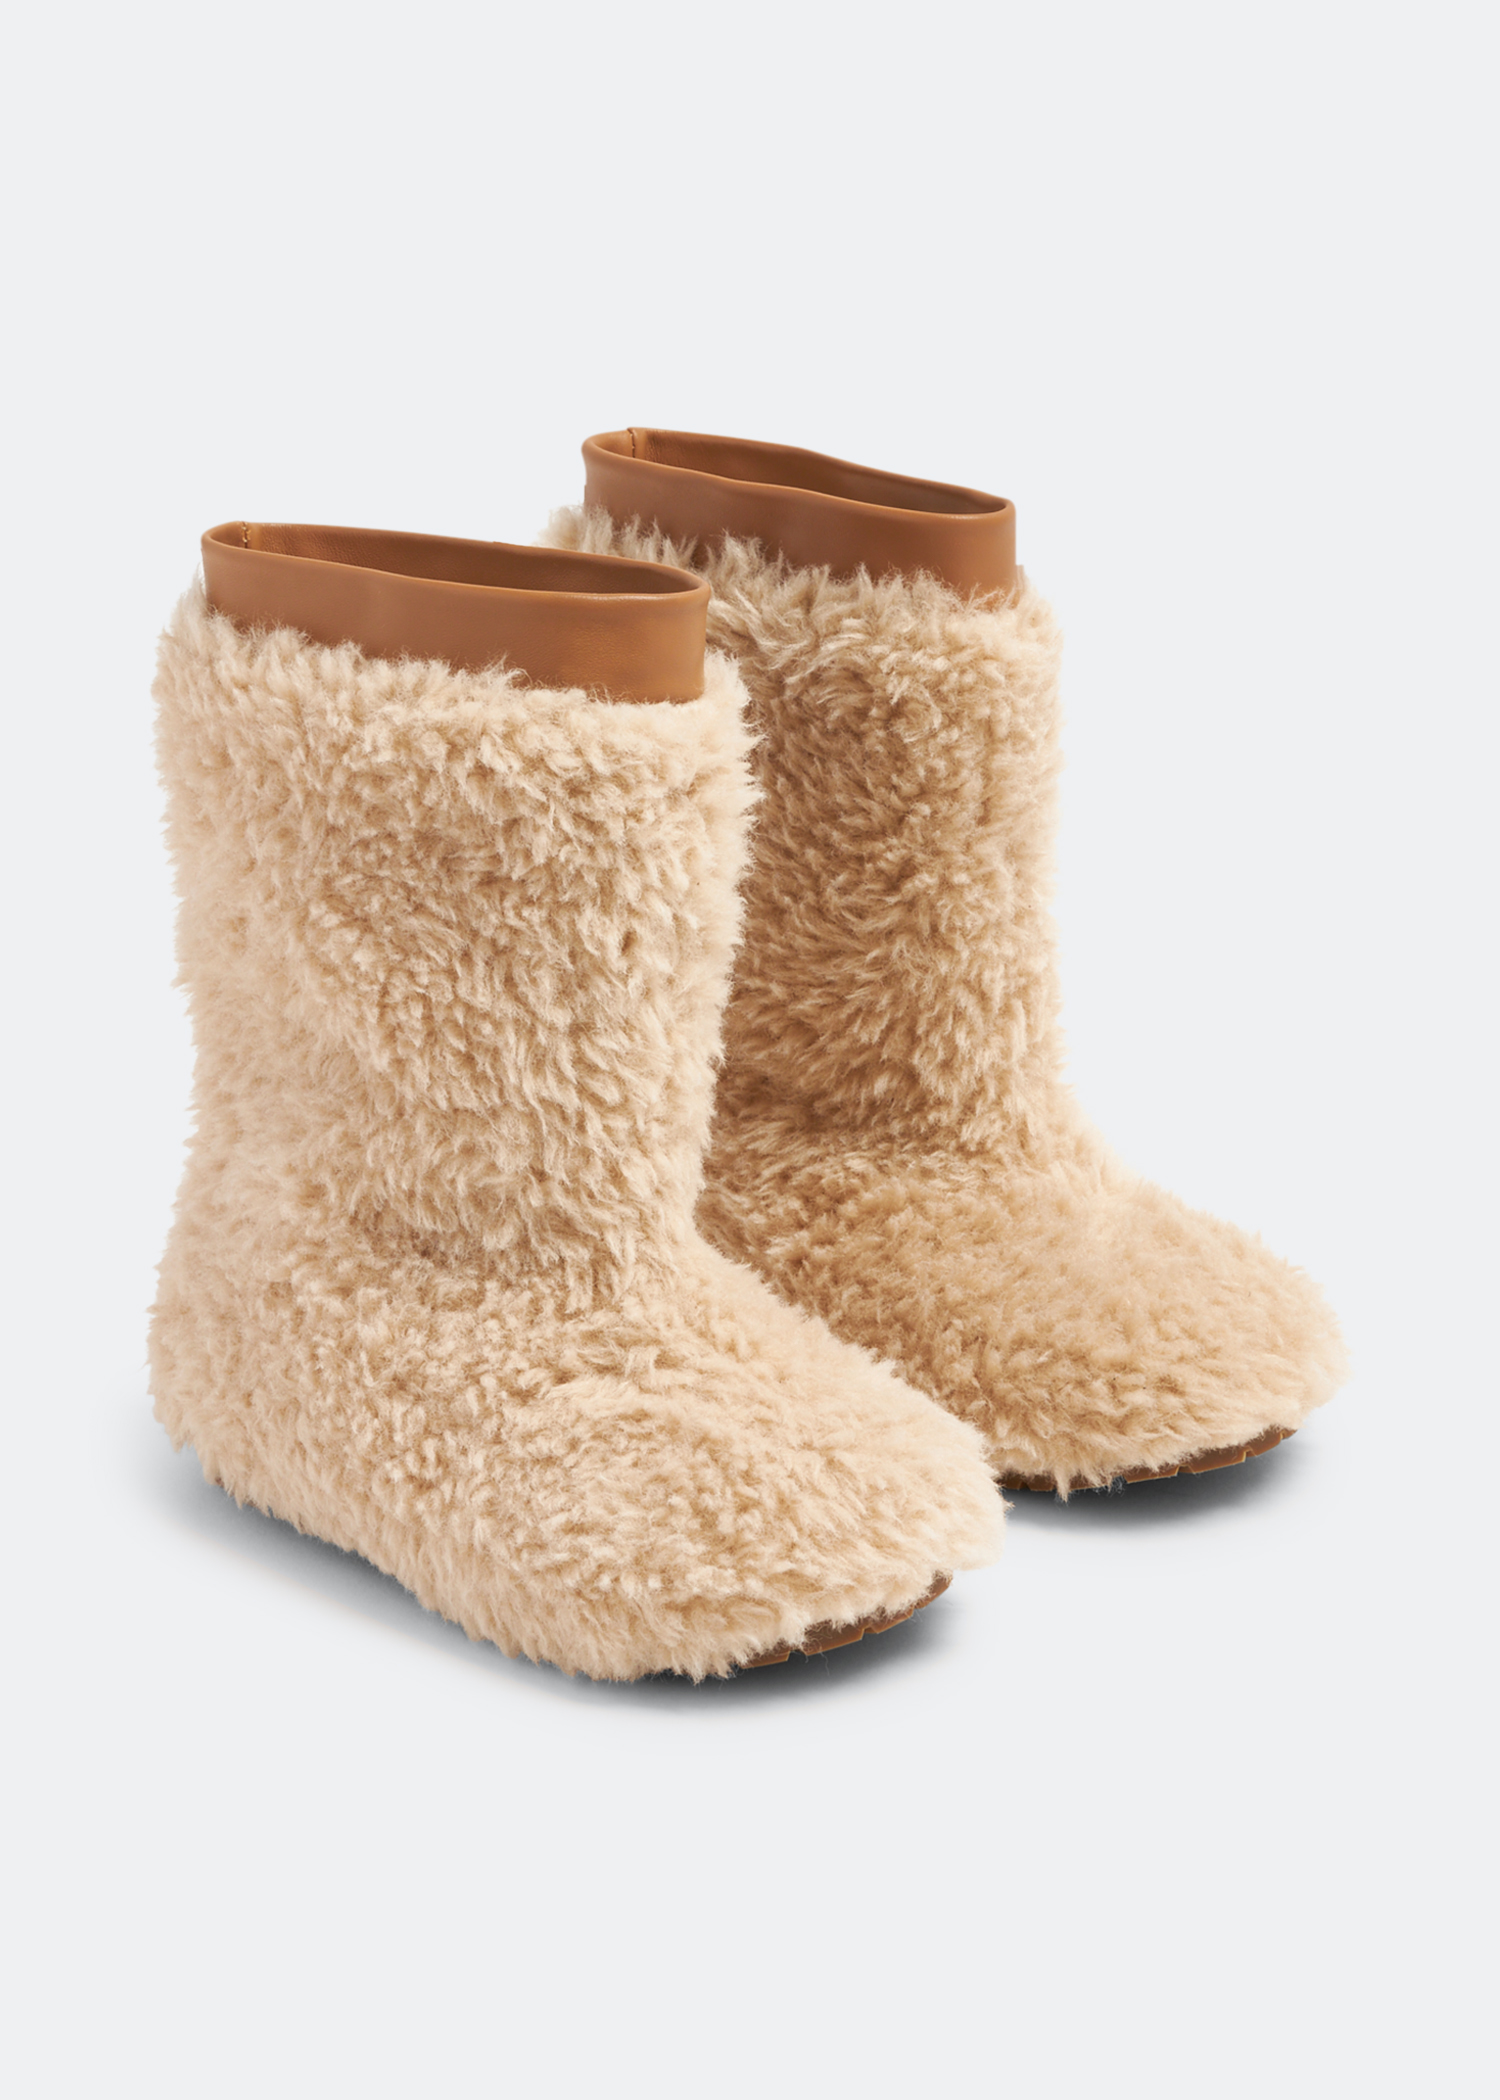 Designer Children Yeti Mini Beige Boots For Baby Girls – Age of